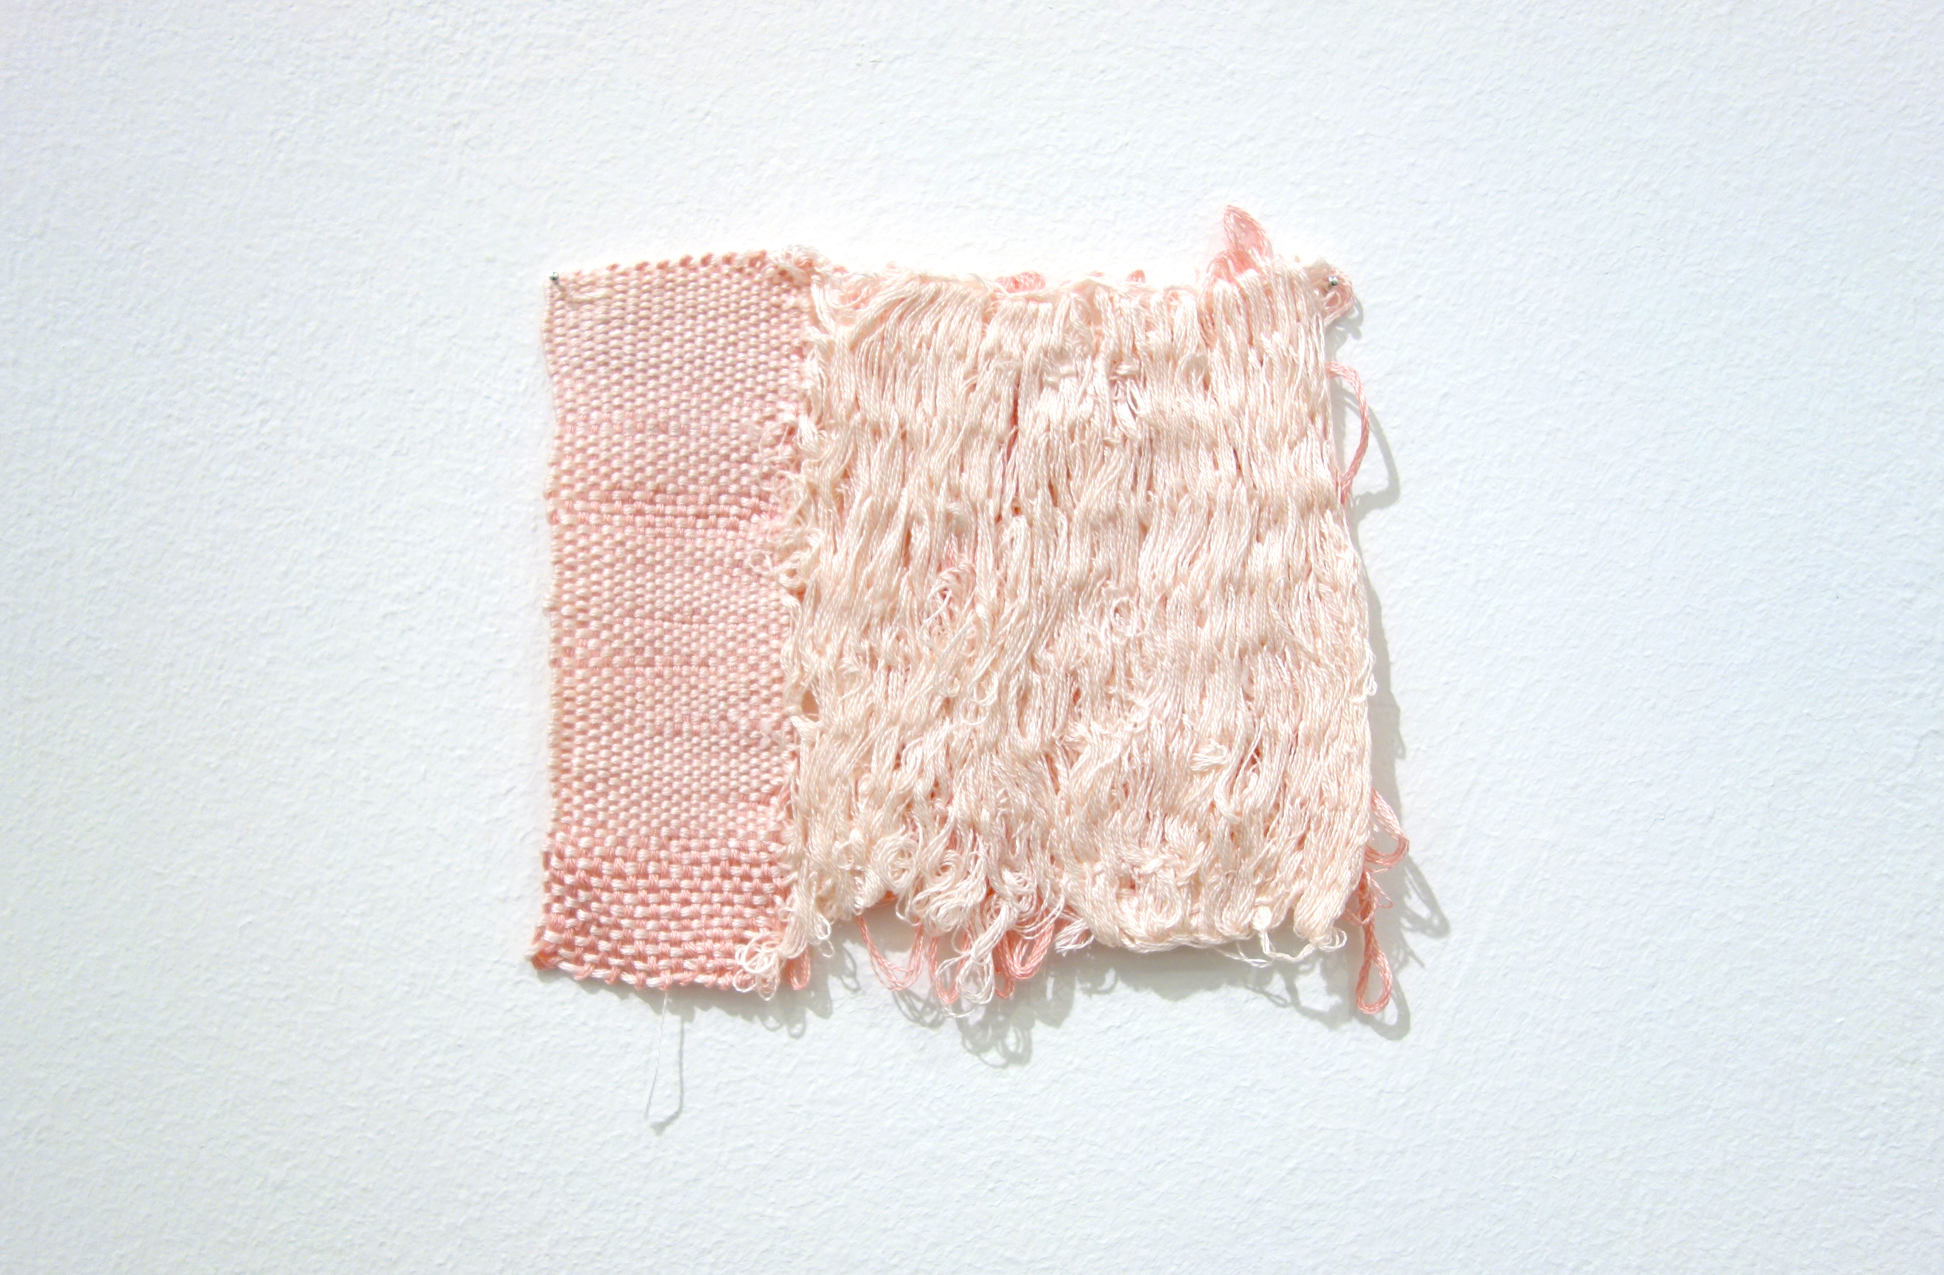 Izziyana Suhaimi, Small Studies of an Everyday Practice X, 2014, Cotton thread; woven, H11 x W13 cm.jpg